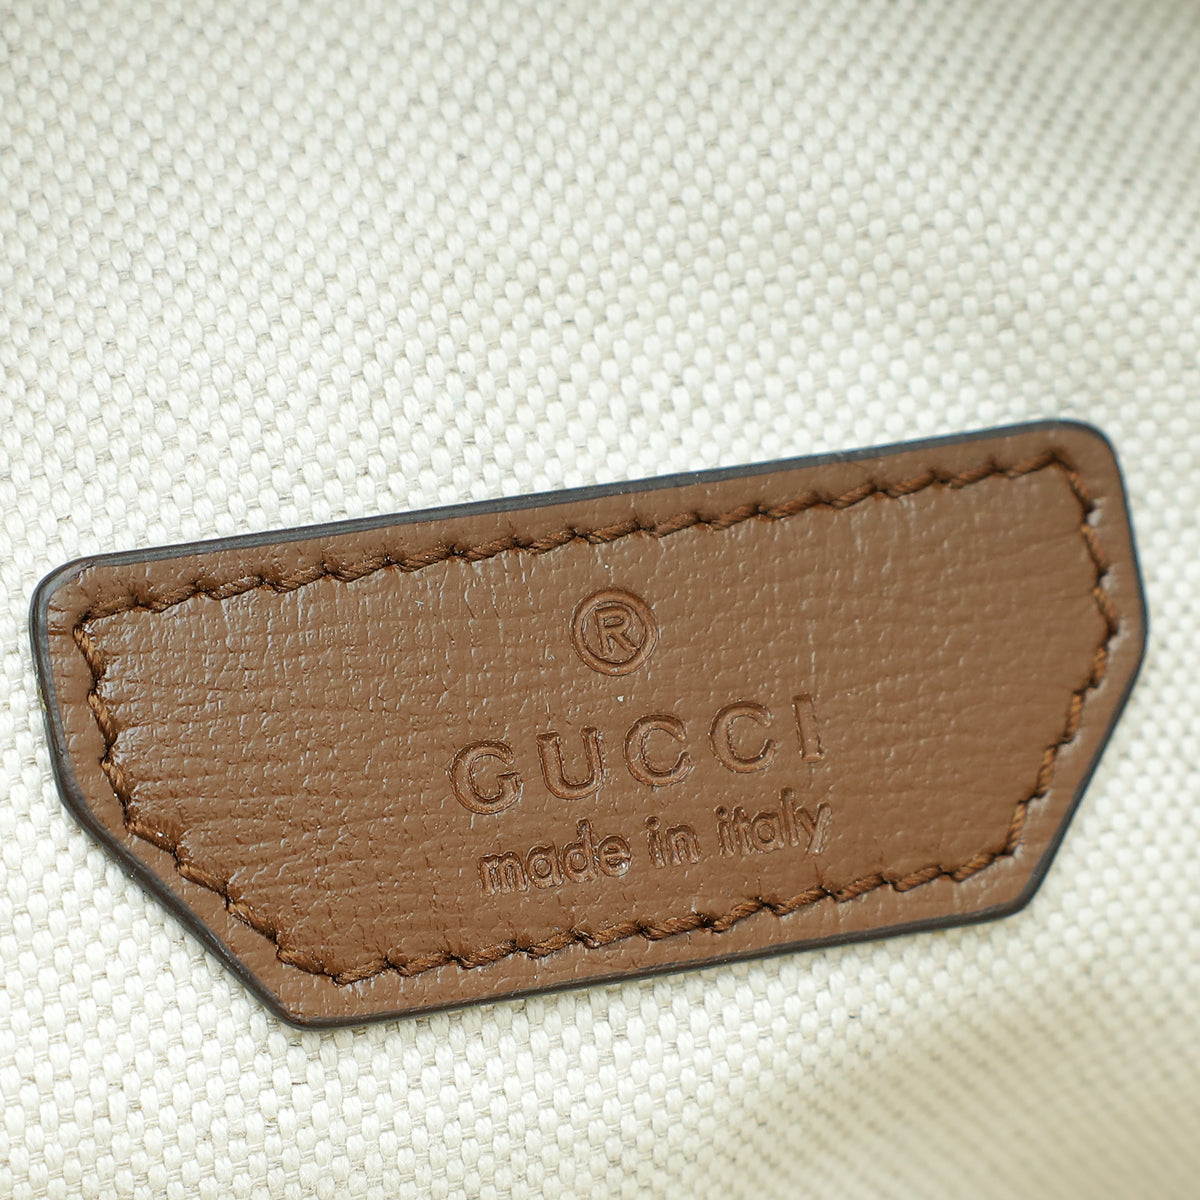 Load image into Gallery viewer, Gucci Tricolor GG Supreme Interlocking G Belt Bag
